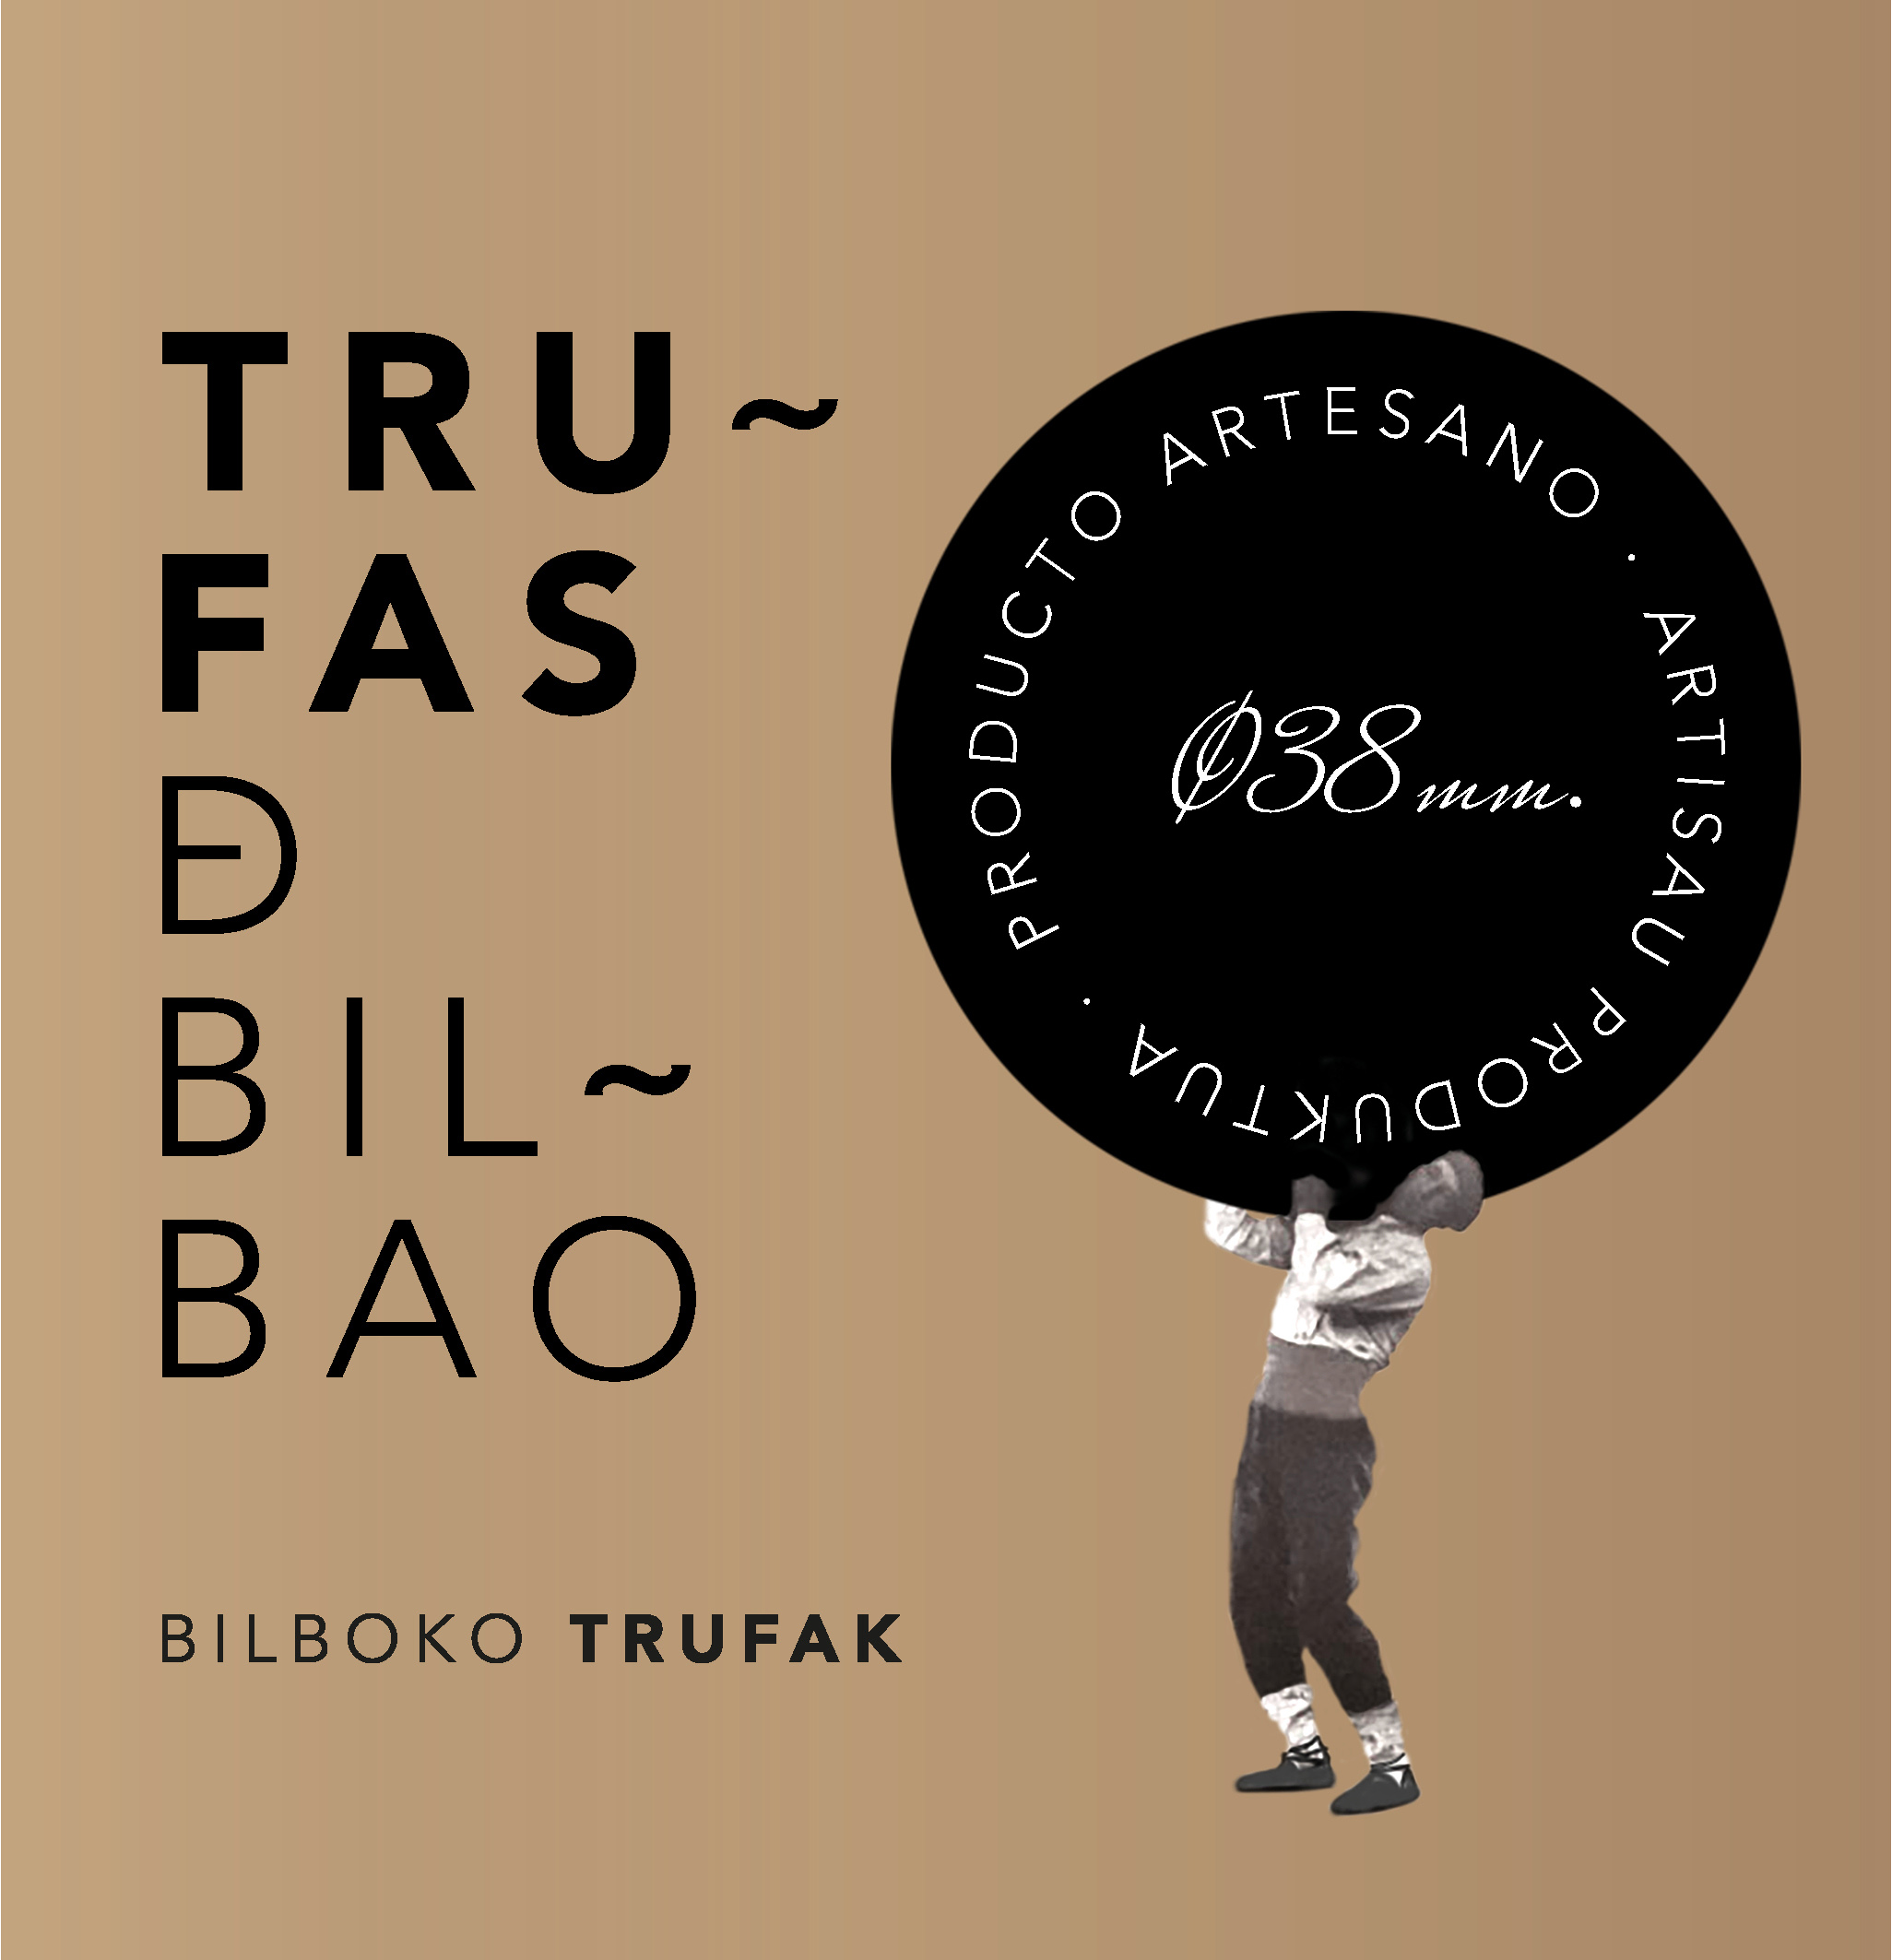 BIZKARRA. TURRONES Y TRUFAS DE BILBAO by TACTICCO BRANDPARTNERS STUDIO - Creative Work